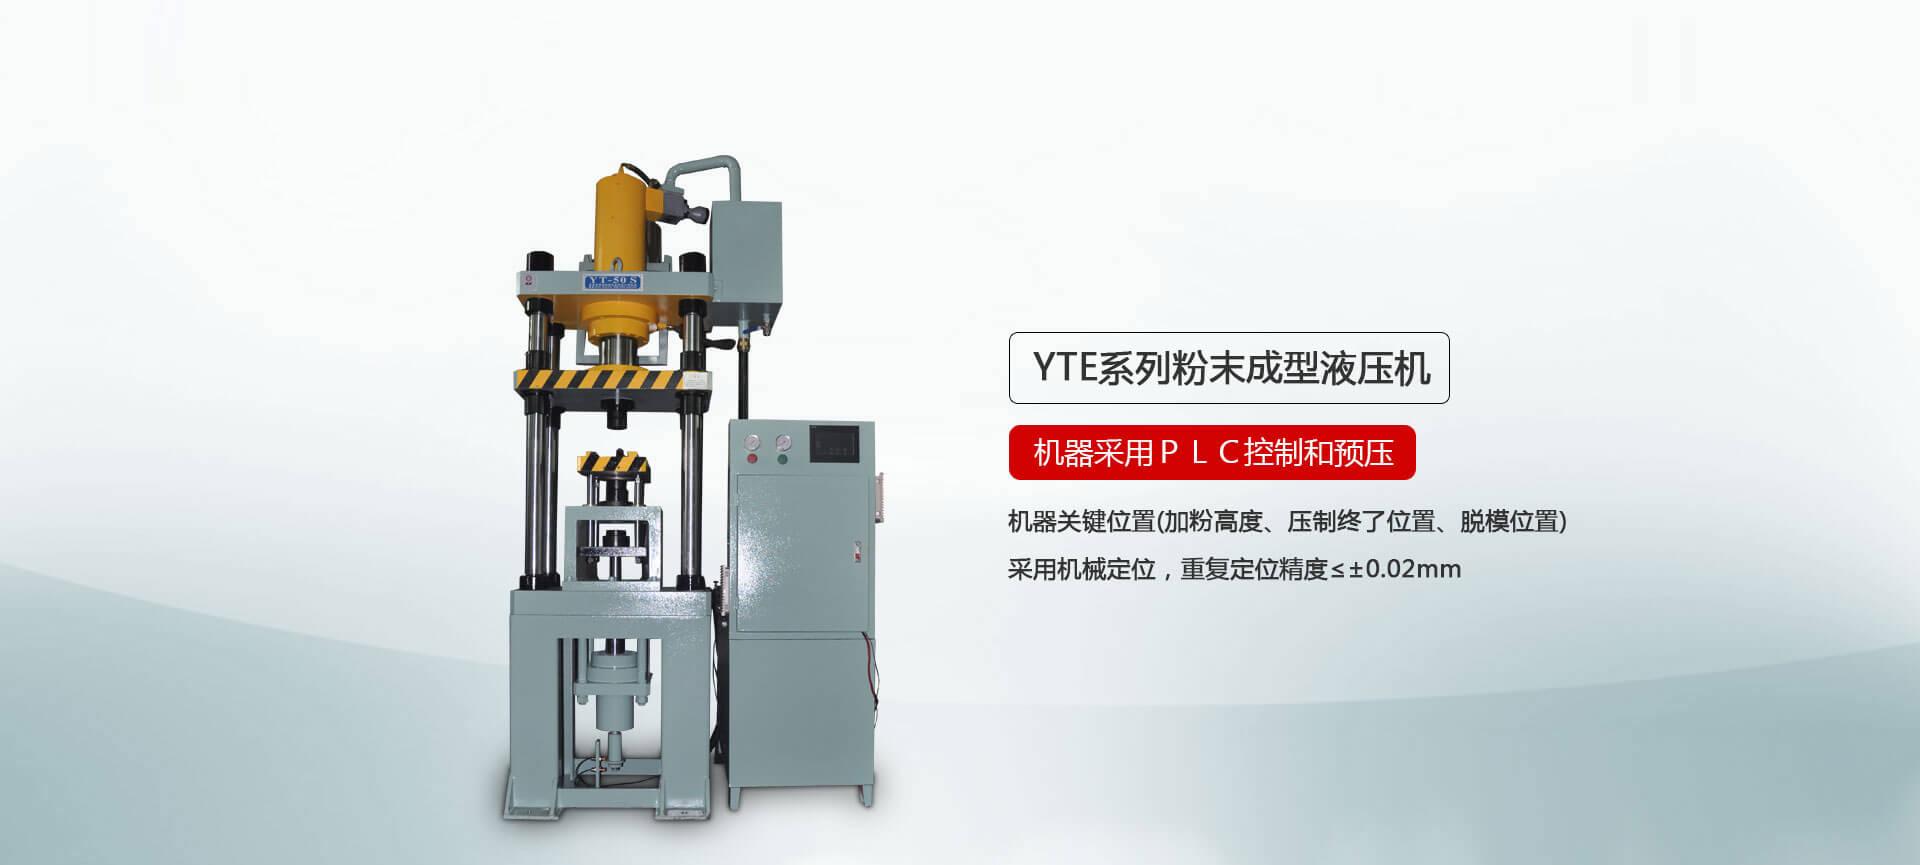 YTM系列粉末成型油压机